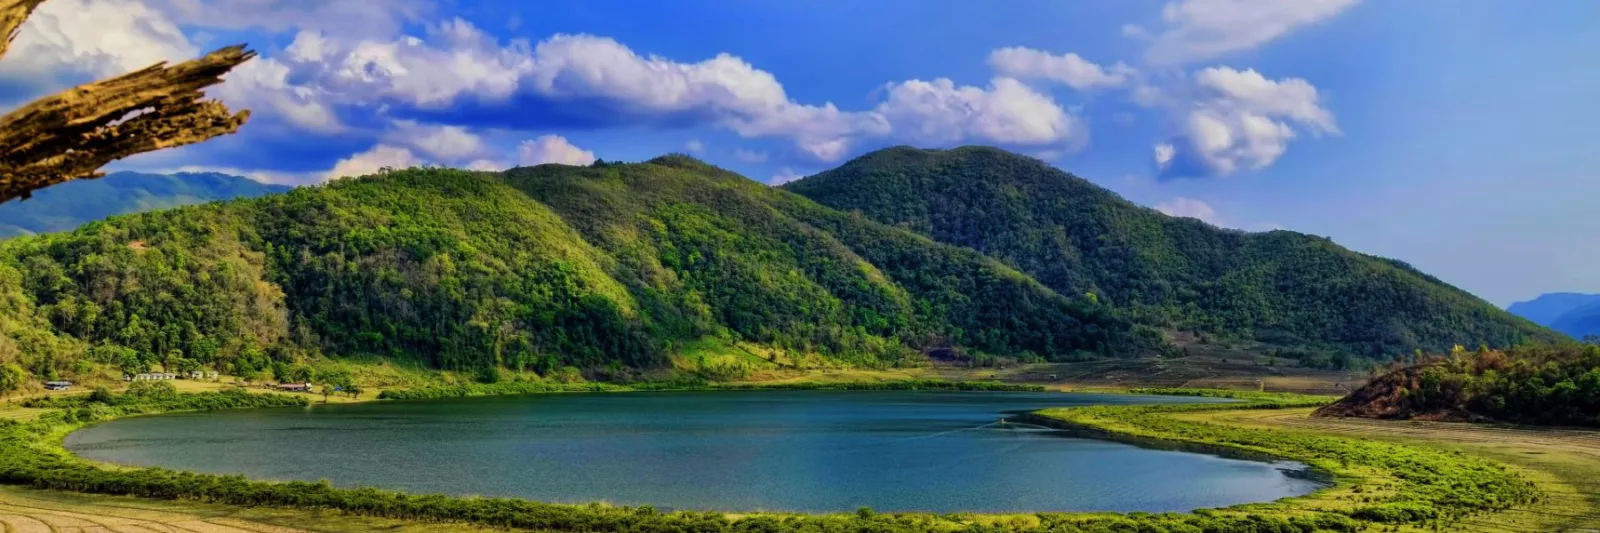 Le lac Rih Dil